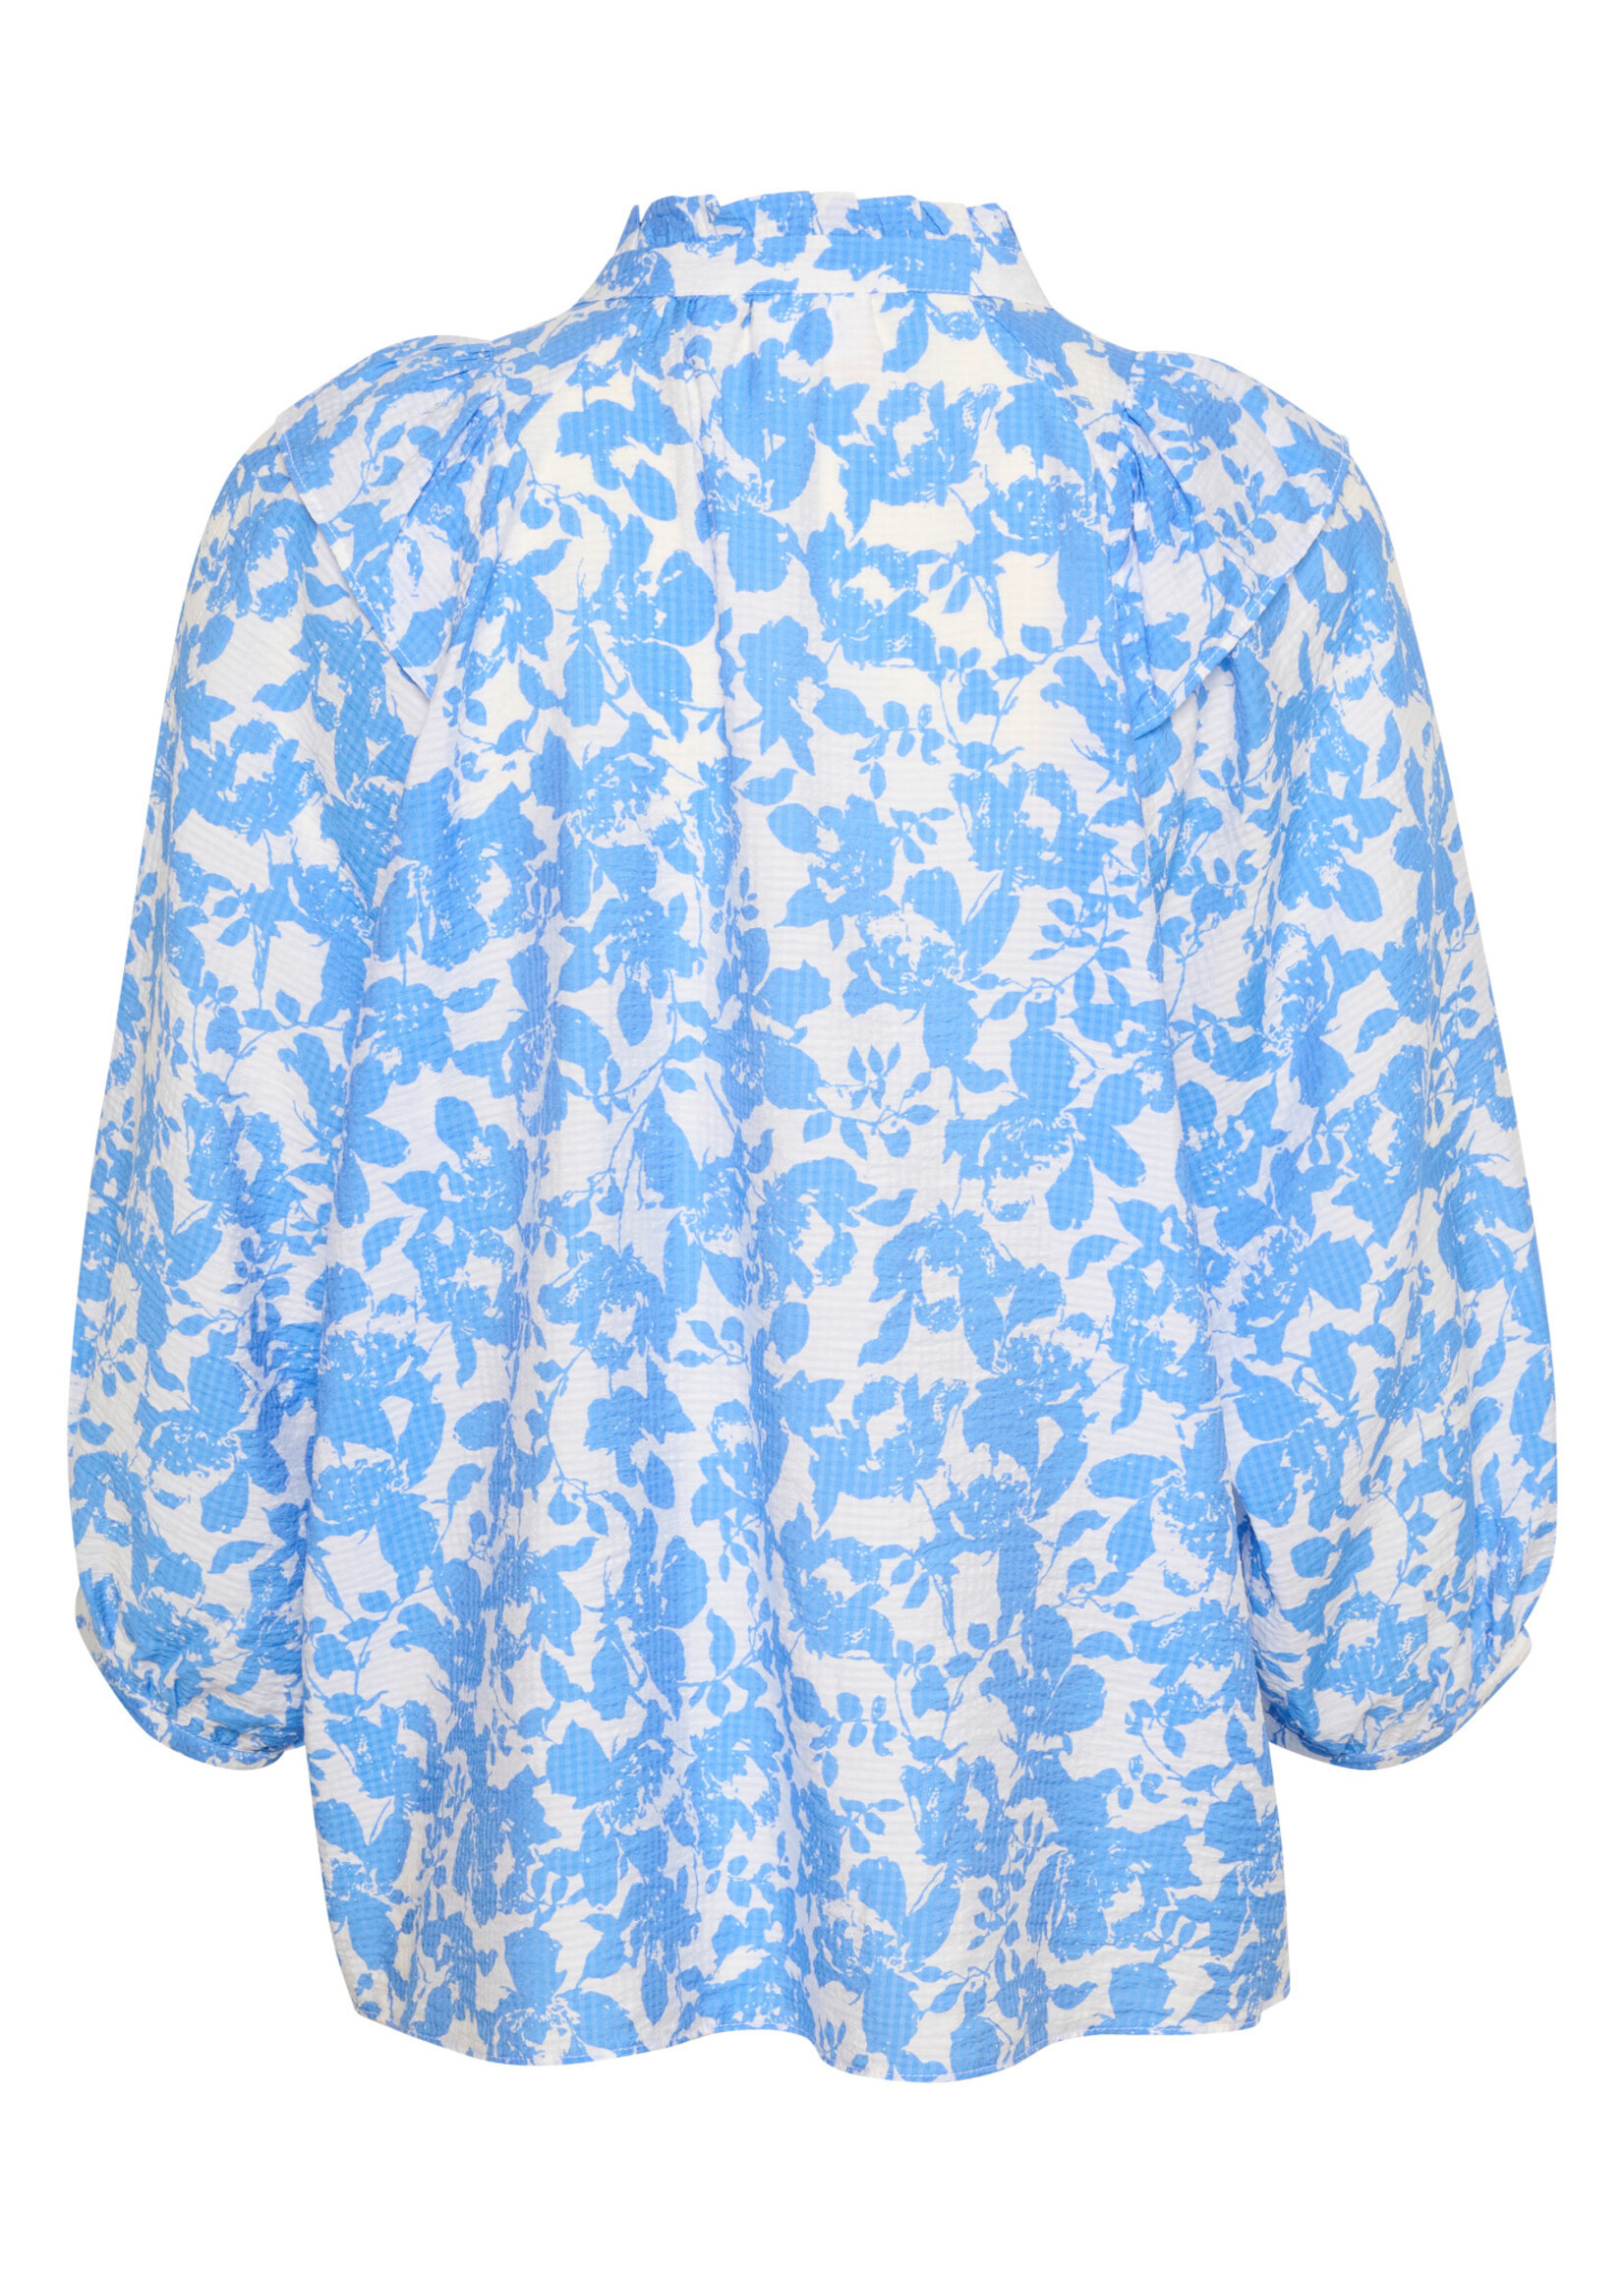 Saint Tropez Saint Tropez, DaphneSZ Shirt, Ultramarine Porce. Size: